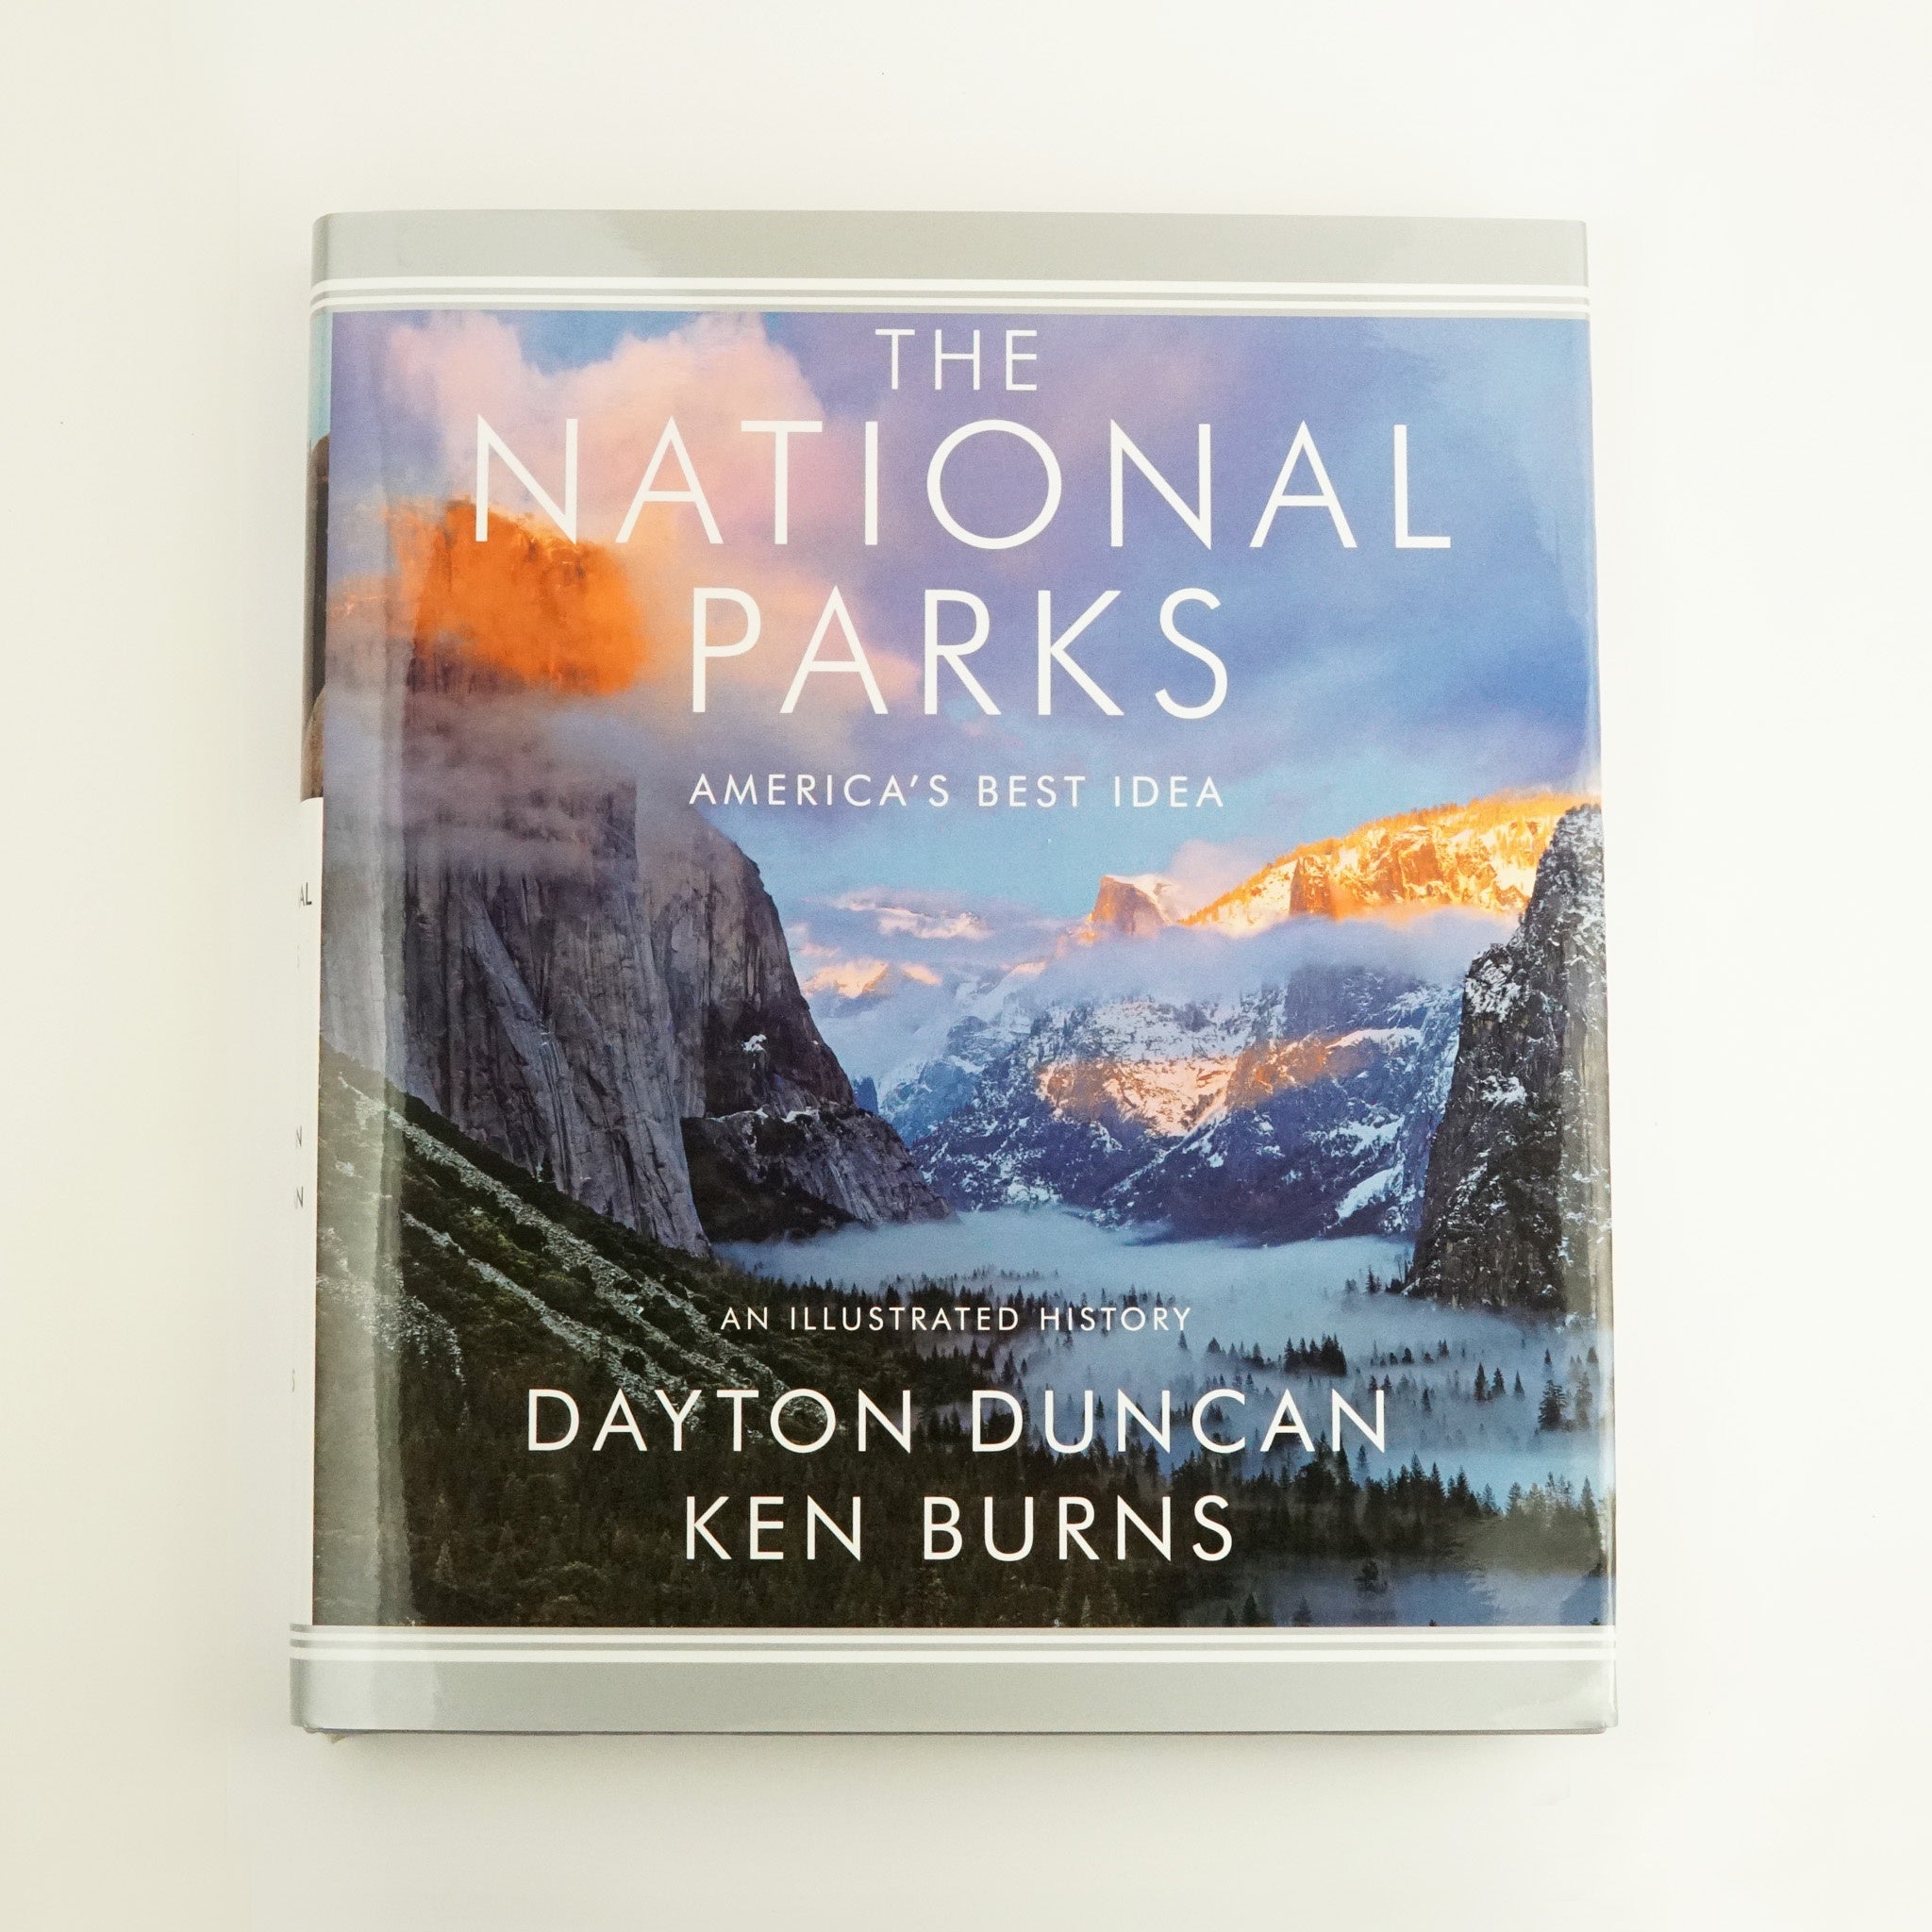 BK 10 THE NATIONAL PARKS: AMERICA'S BEST IDEA BY DAYTON DUNCAN & KEN BURNS #21028932 OCT22